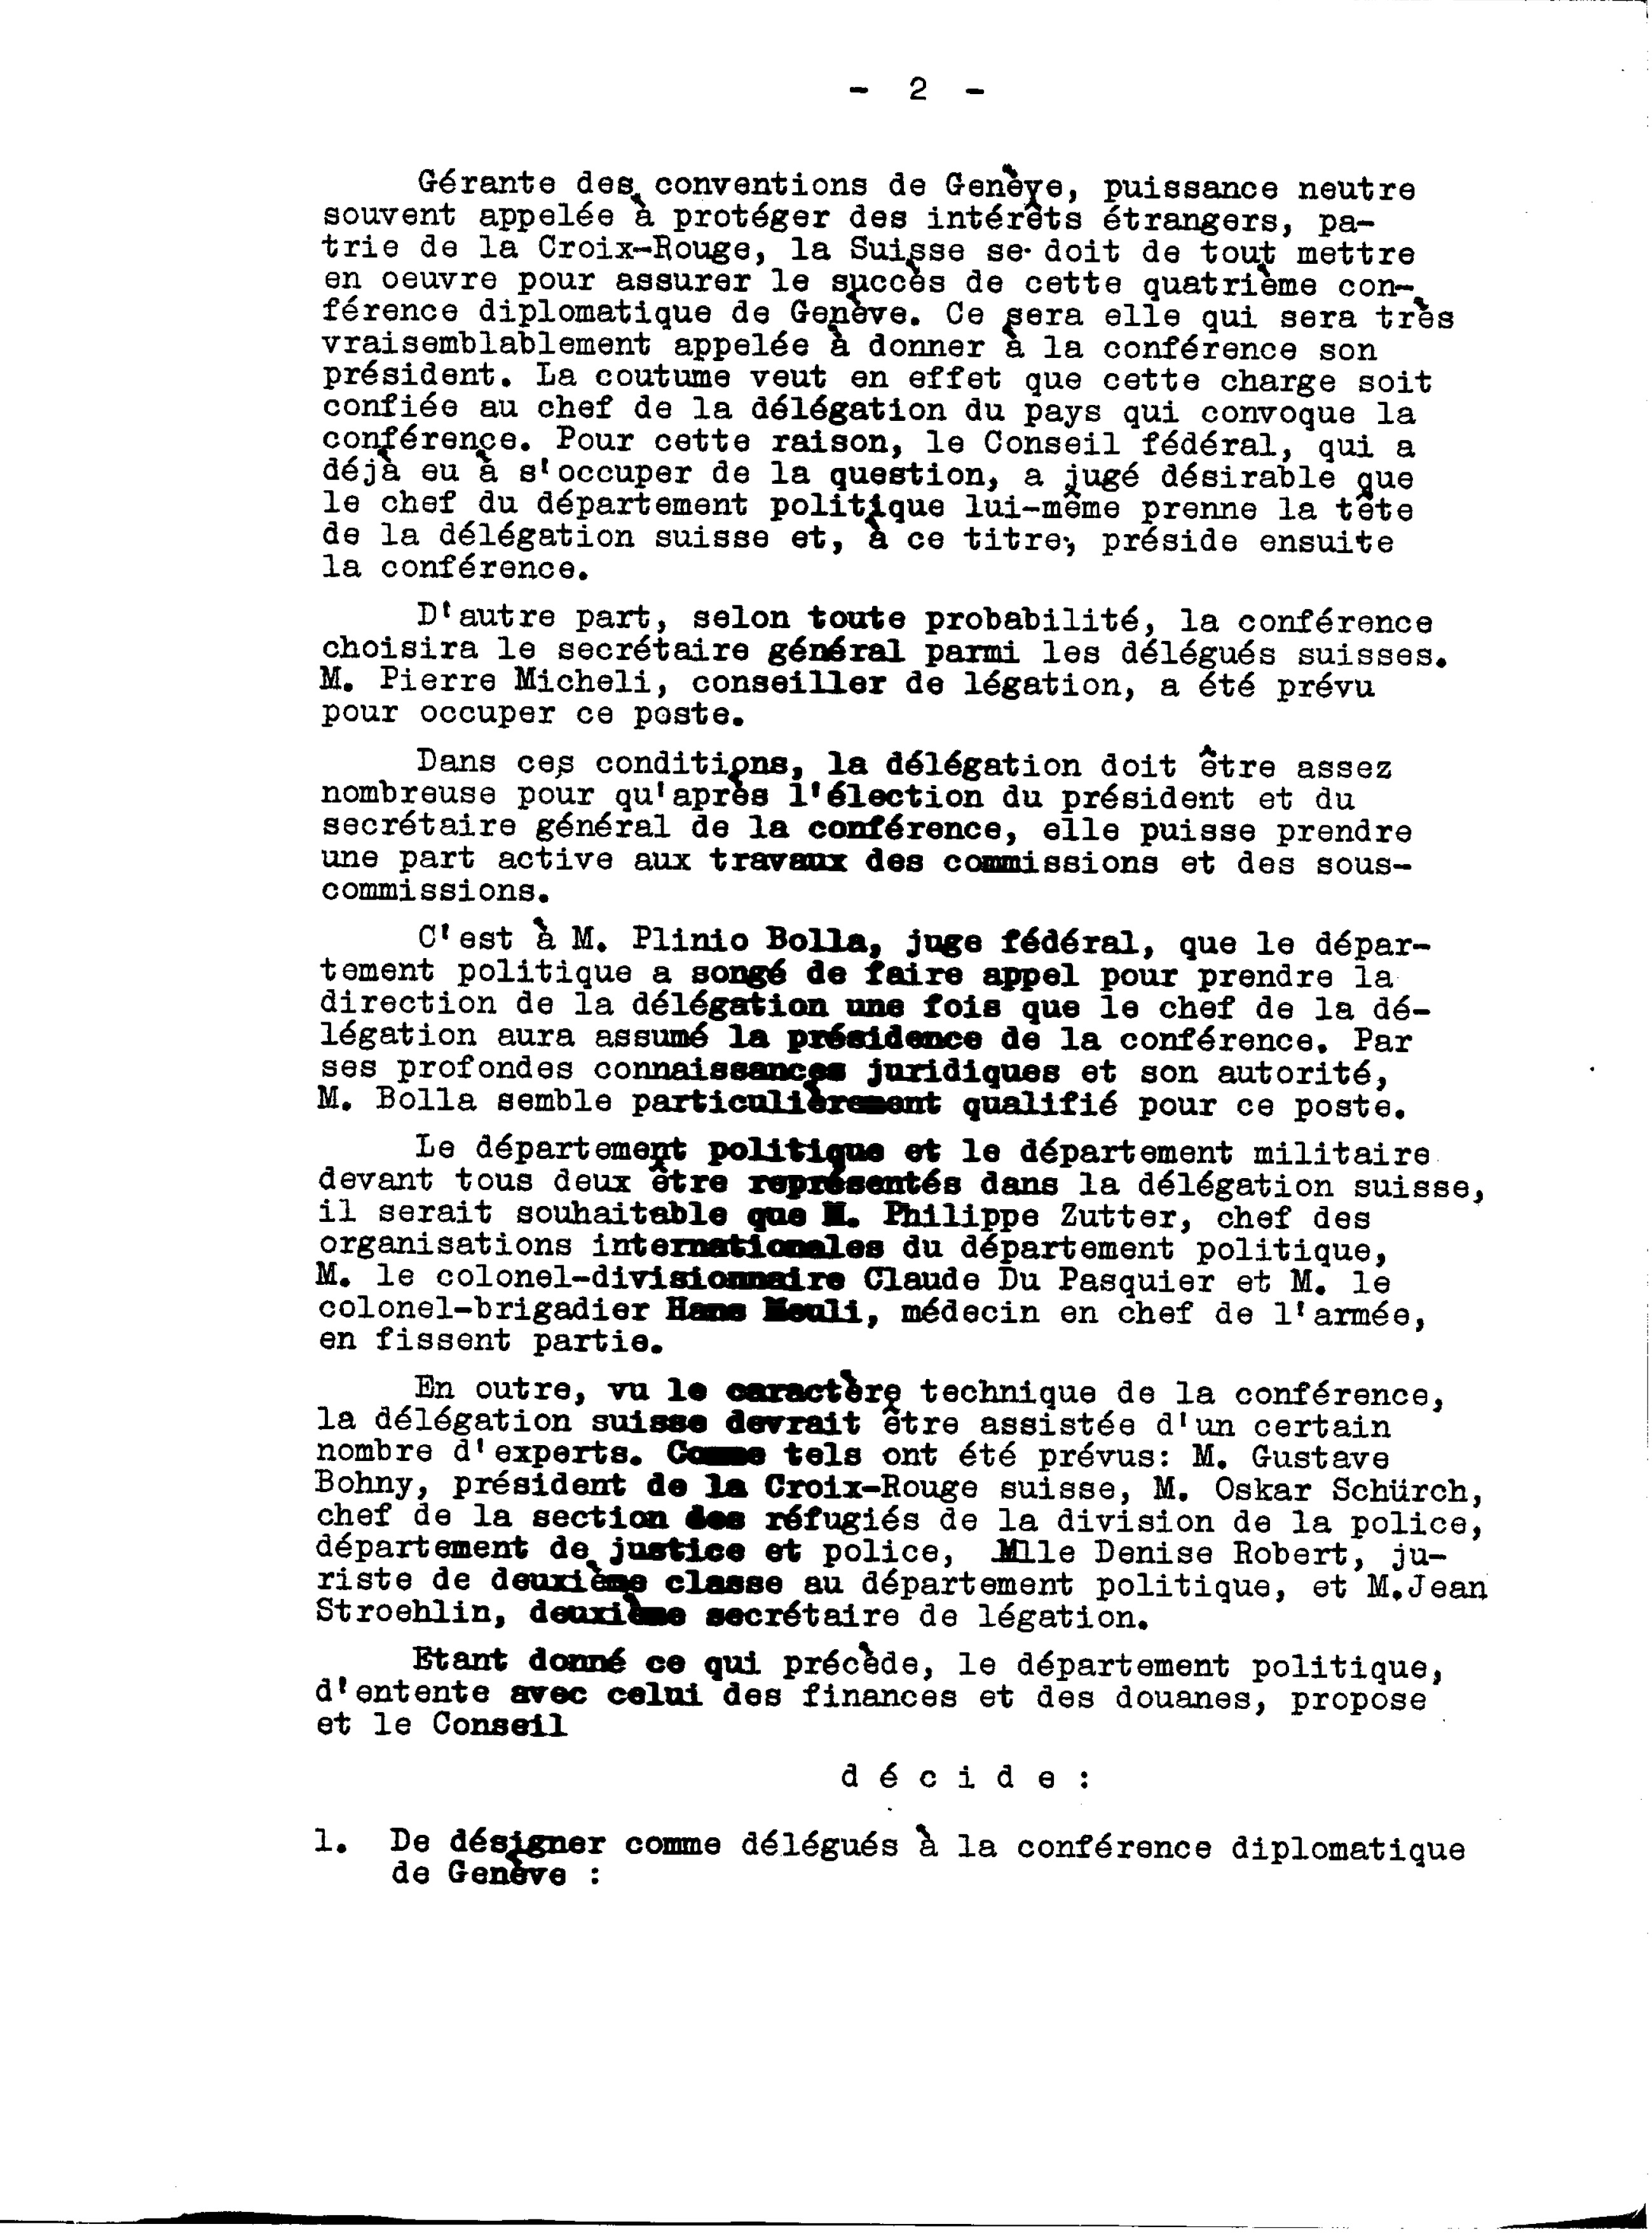 Beschluss des Bundesrats vom 1. April 1949 